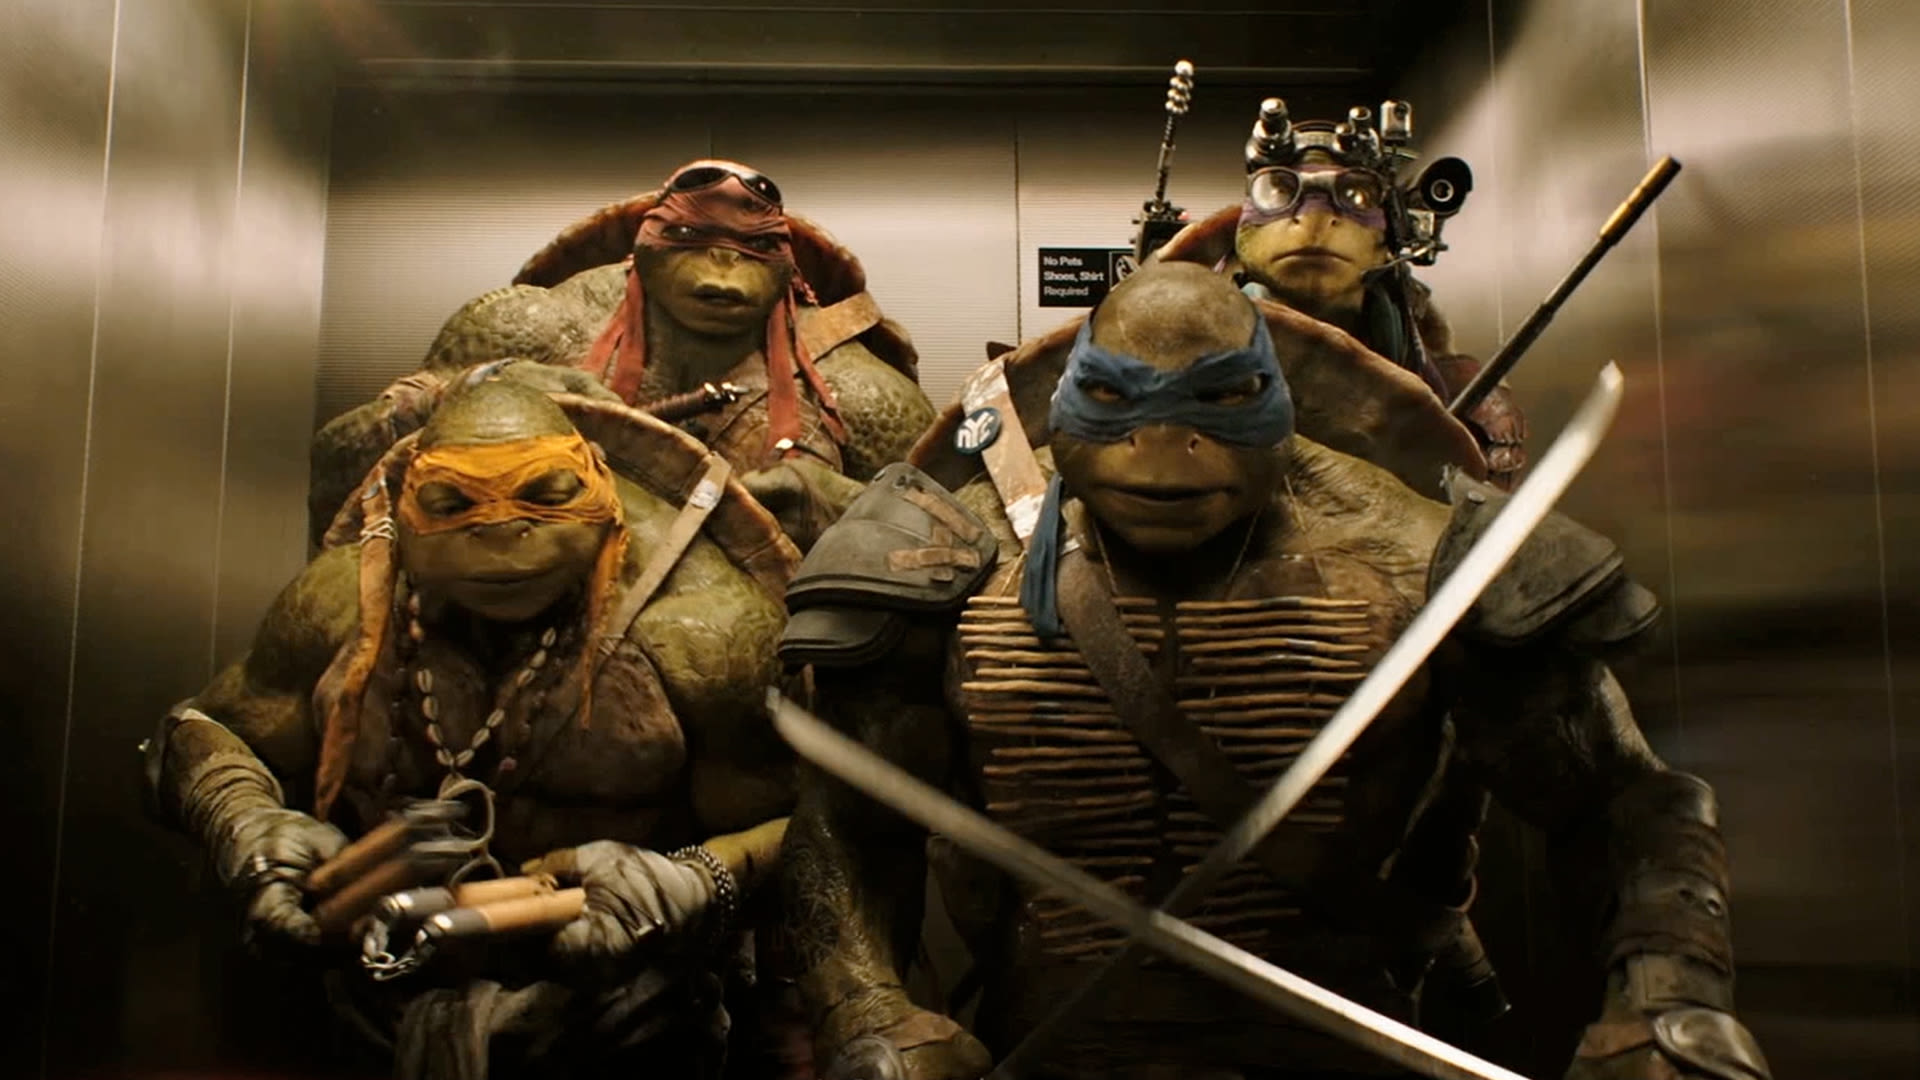 Teenage Mutant Ninja Turtles • Facer: the world's largest watch face  platform